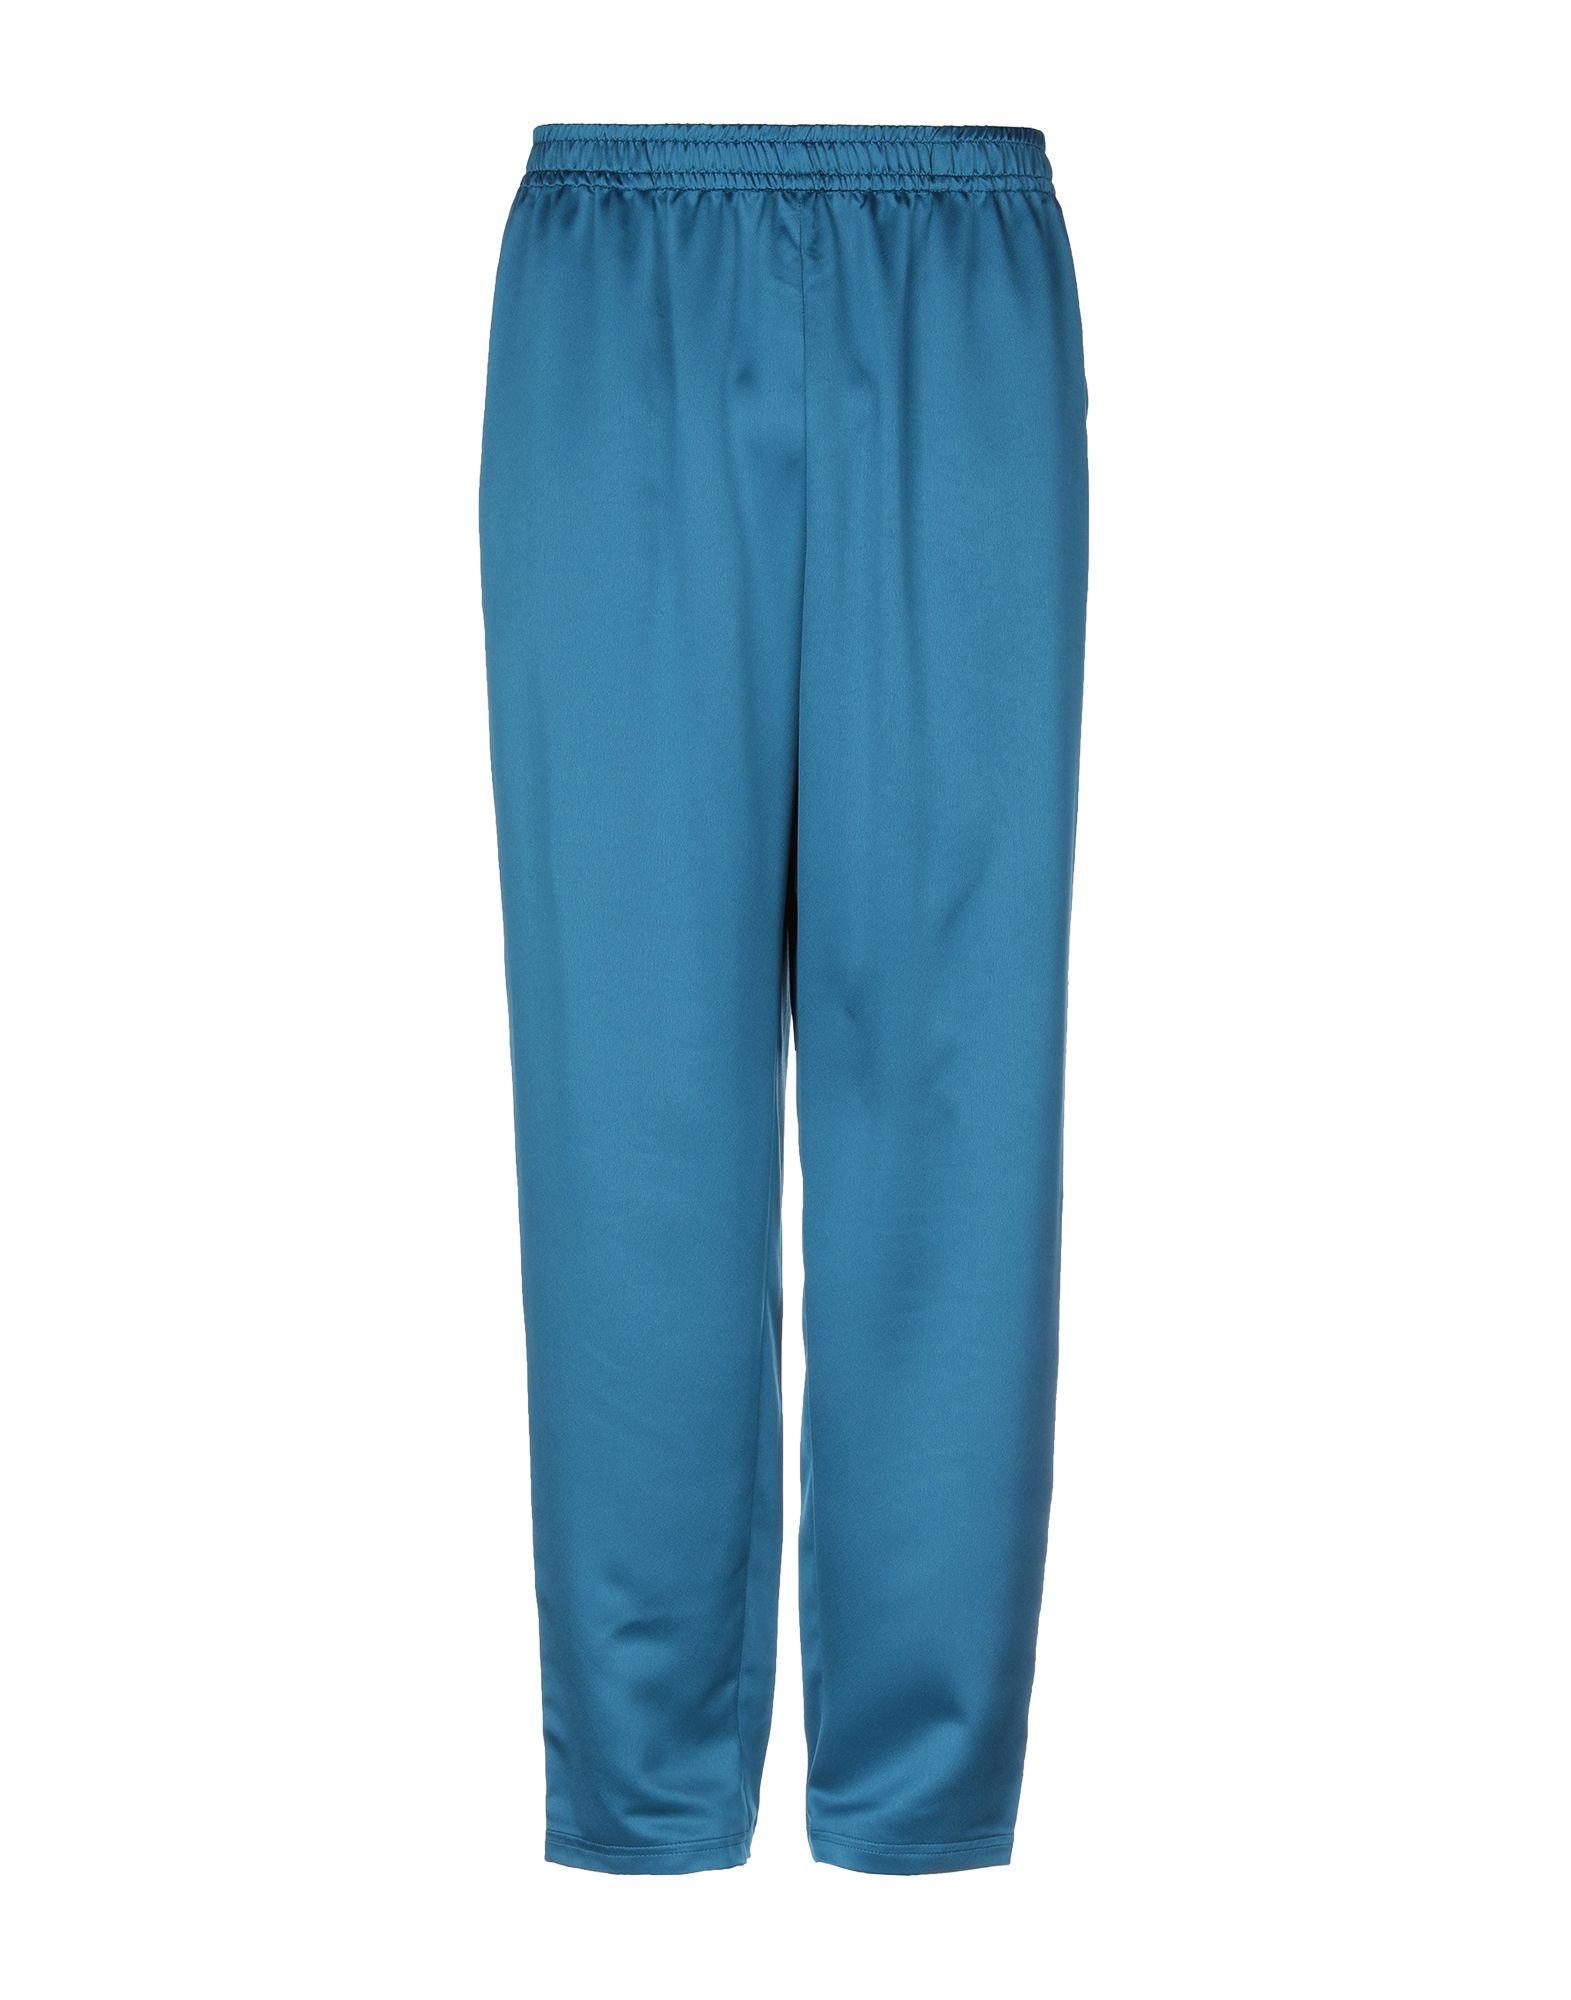 Kappa Satin Casual Pants in Deep Jade (Blue) for Men - Lyst